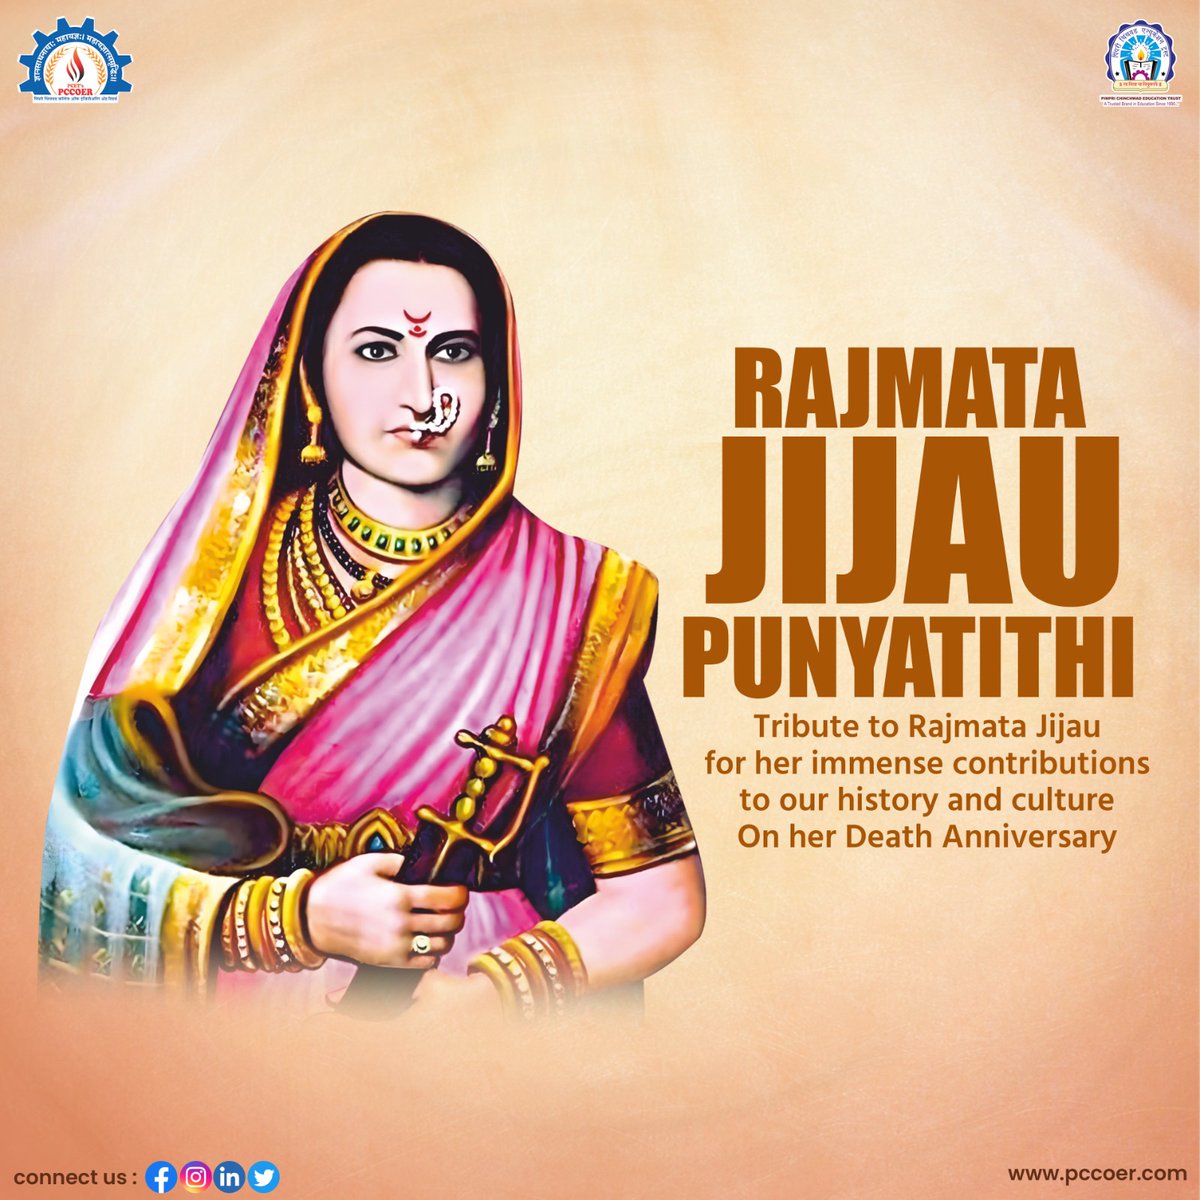 Let's pay #tribute to #𝑹𝒂𝒋𝒎𝒂𝒕𝒂𝑱𝒊𝒋𝒂𝒖 on her #DeathAnniversary for her immense contributions to our history & culture. 

#PCET #PCCOER #jijau #maharashtra #shivajimaharaj #shivray #maratha #swarajya #pune #jijaumata #JayJijauJayShivray #DeathAnniversary